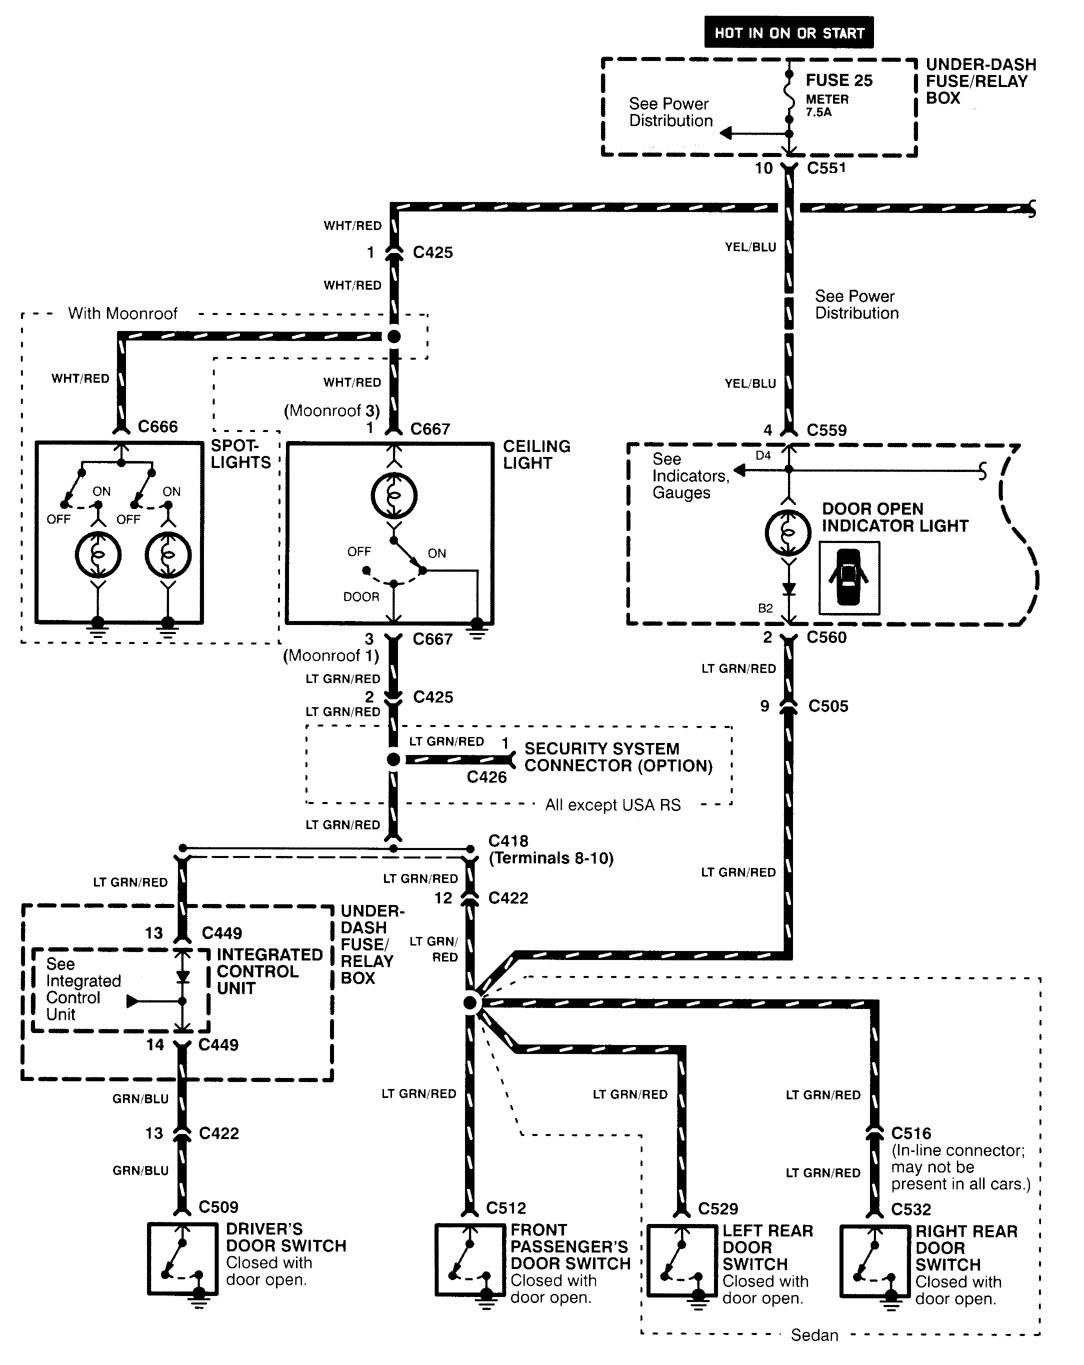 Wiring Manual PDF: 01 Integra Fuse Diagram Wiring Schematic